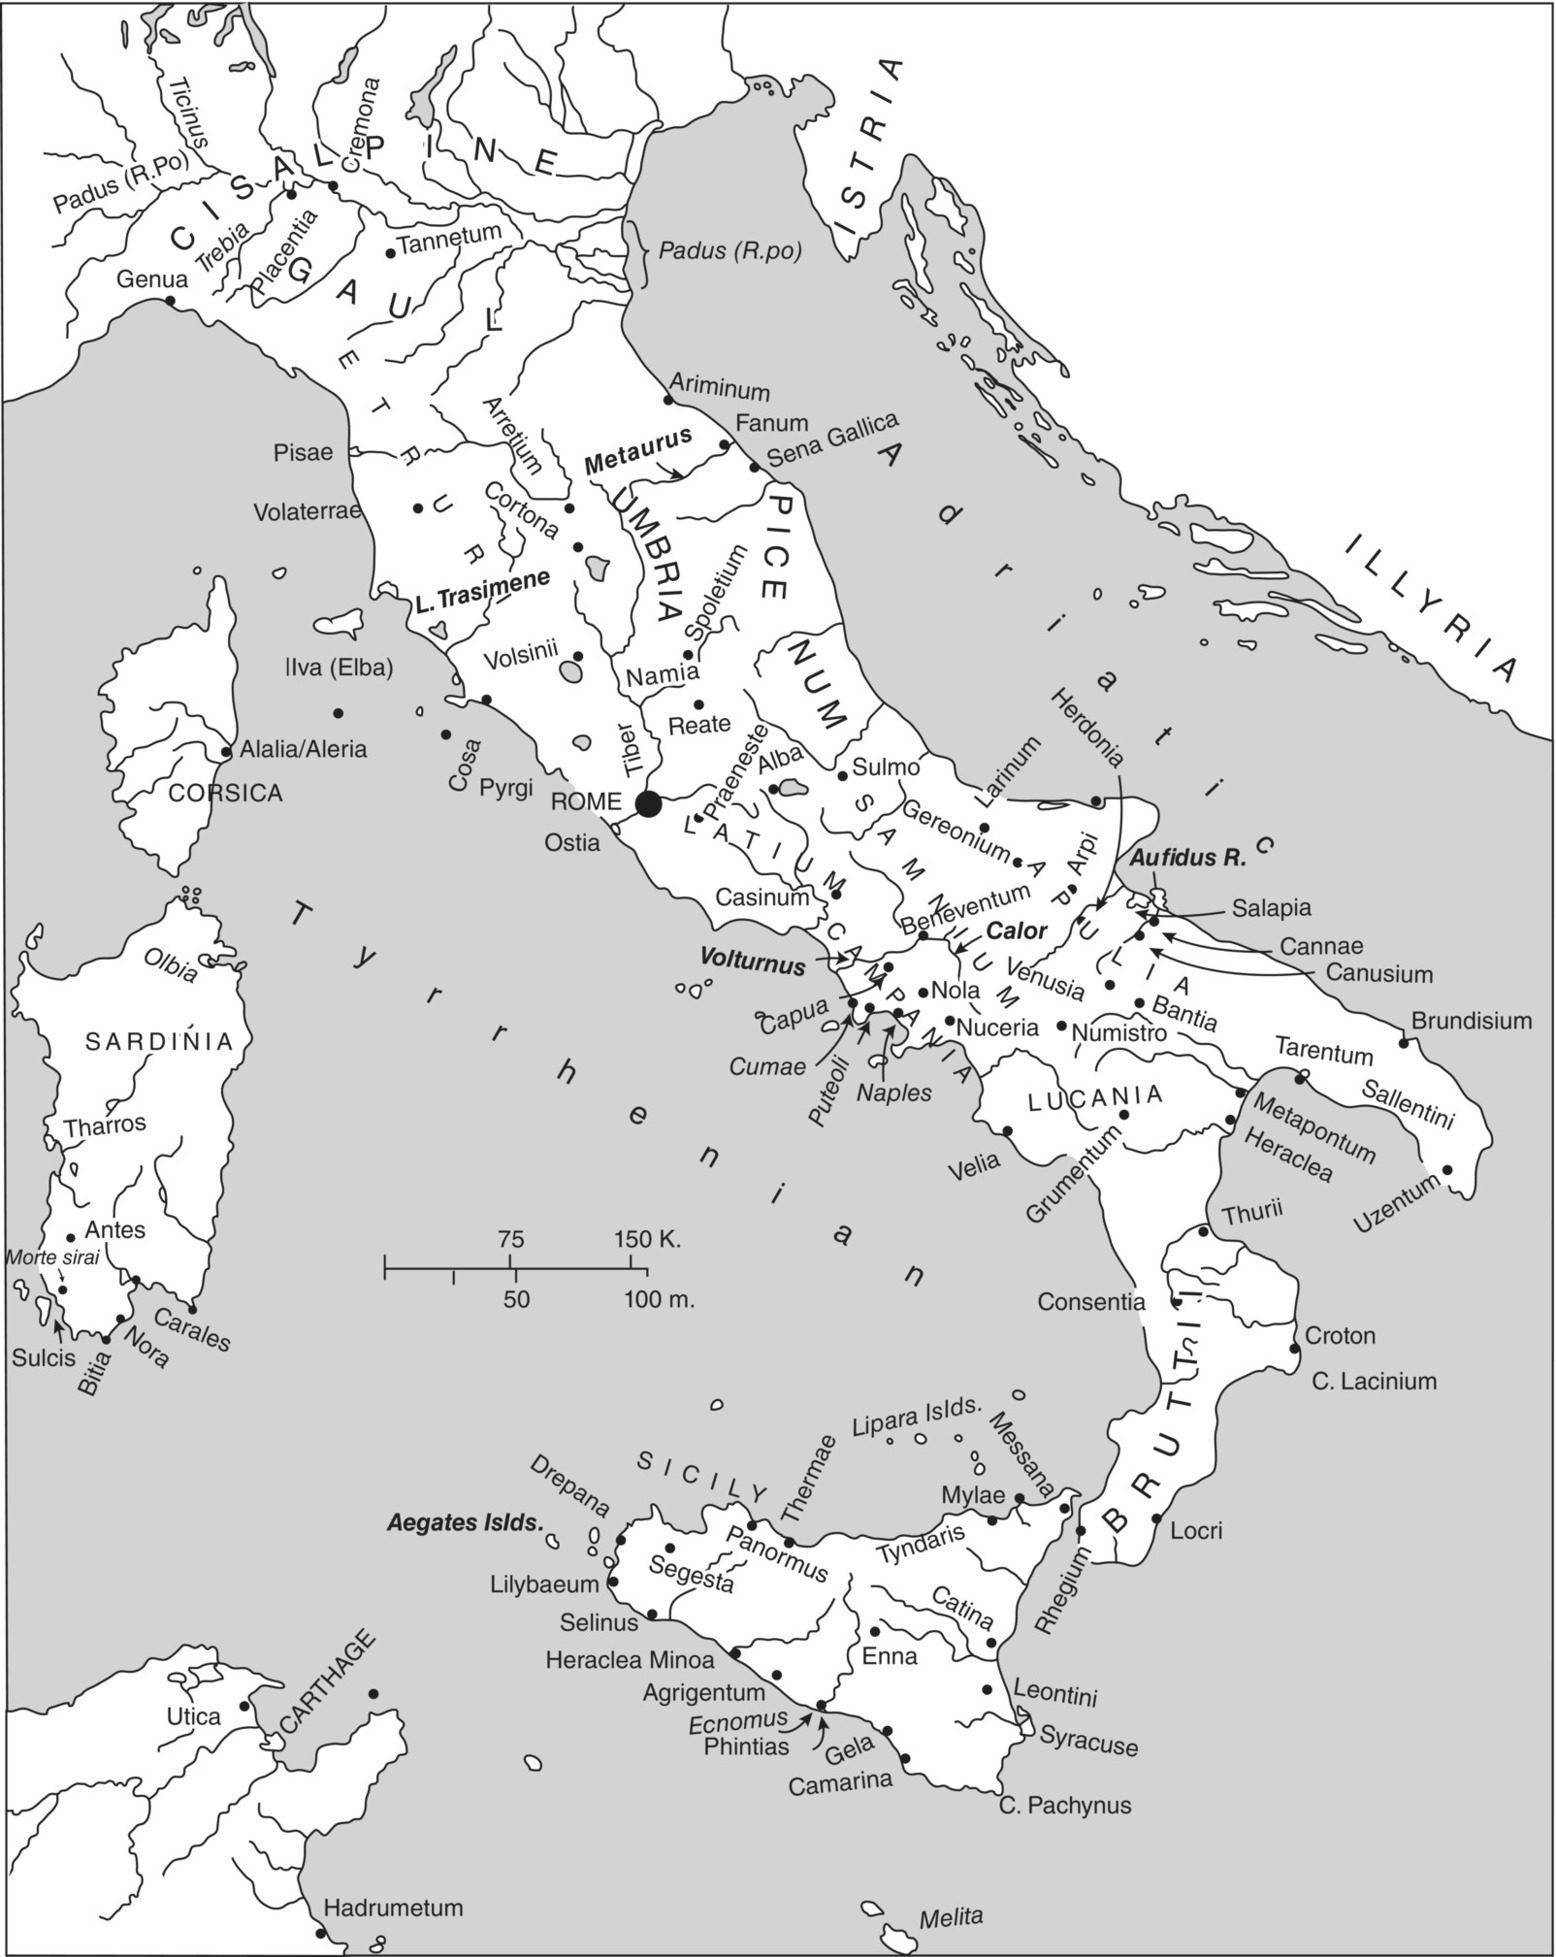 Map of Italy and the Islands displaying a big dot marker for Rome and small dot markers for Alalia/Aleria, Cosa, Cumae, Puteoli, Naples, Ariminum, Fanum, Sena Gallica, Larinum, Velia, Grumentum, Thurii, Heraclea, etc.